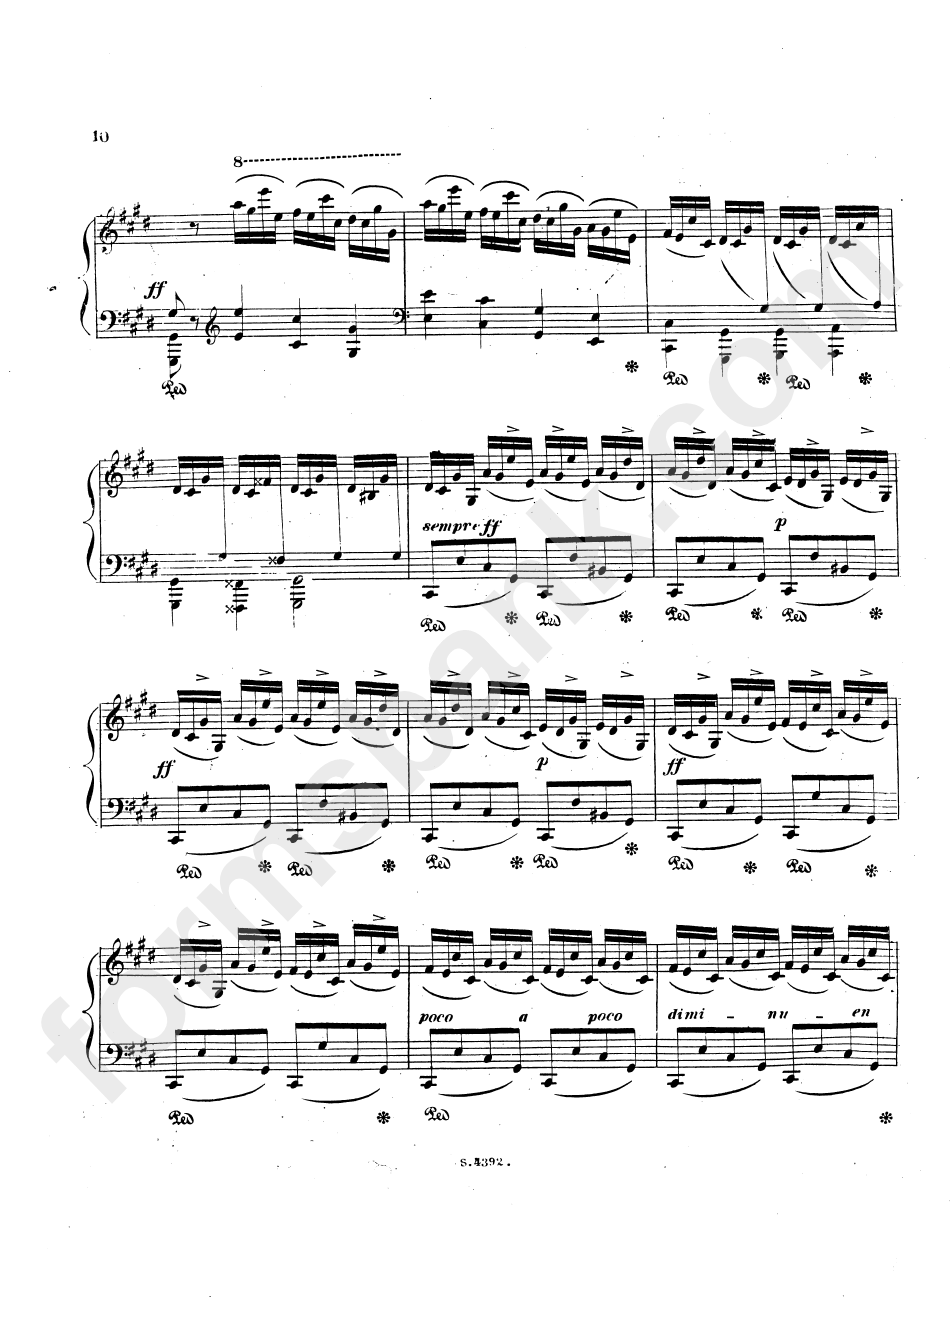 Frederic Chopin - Fantaisie-Impromptu Sheet Music